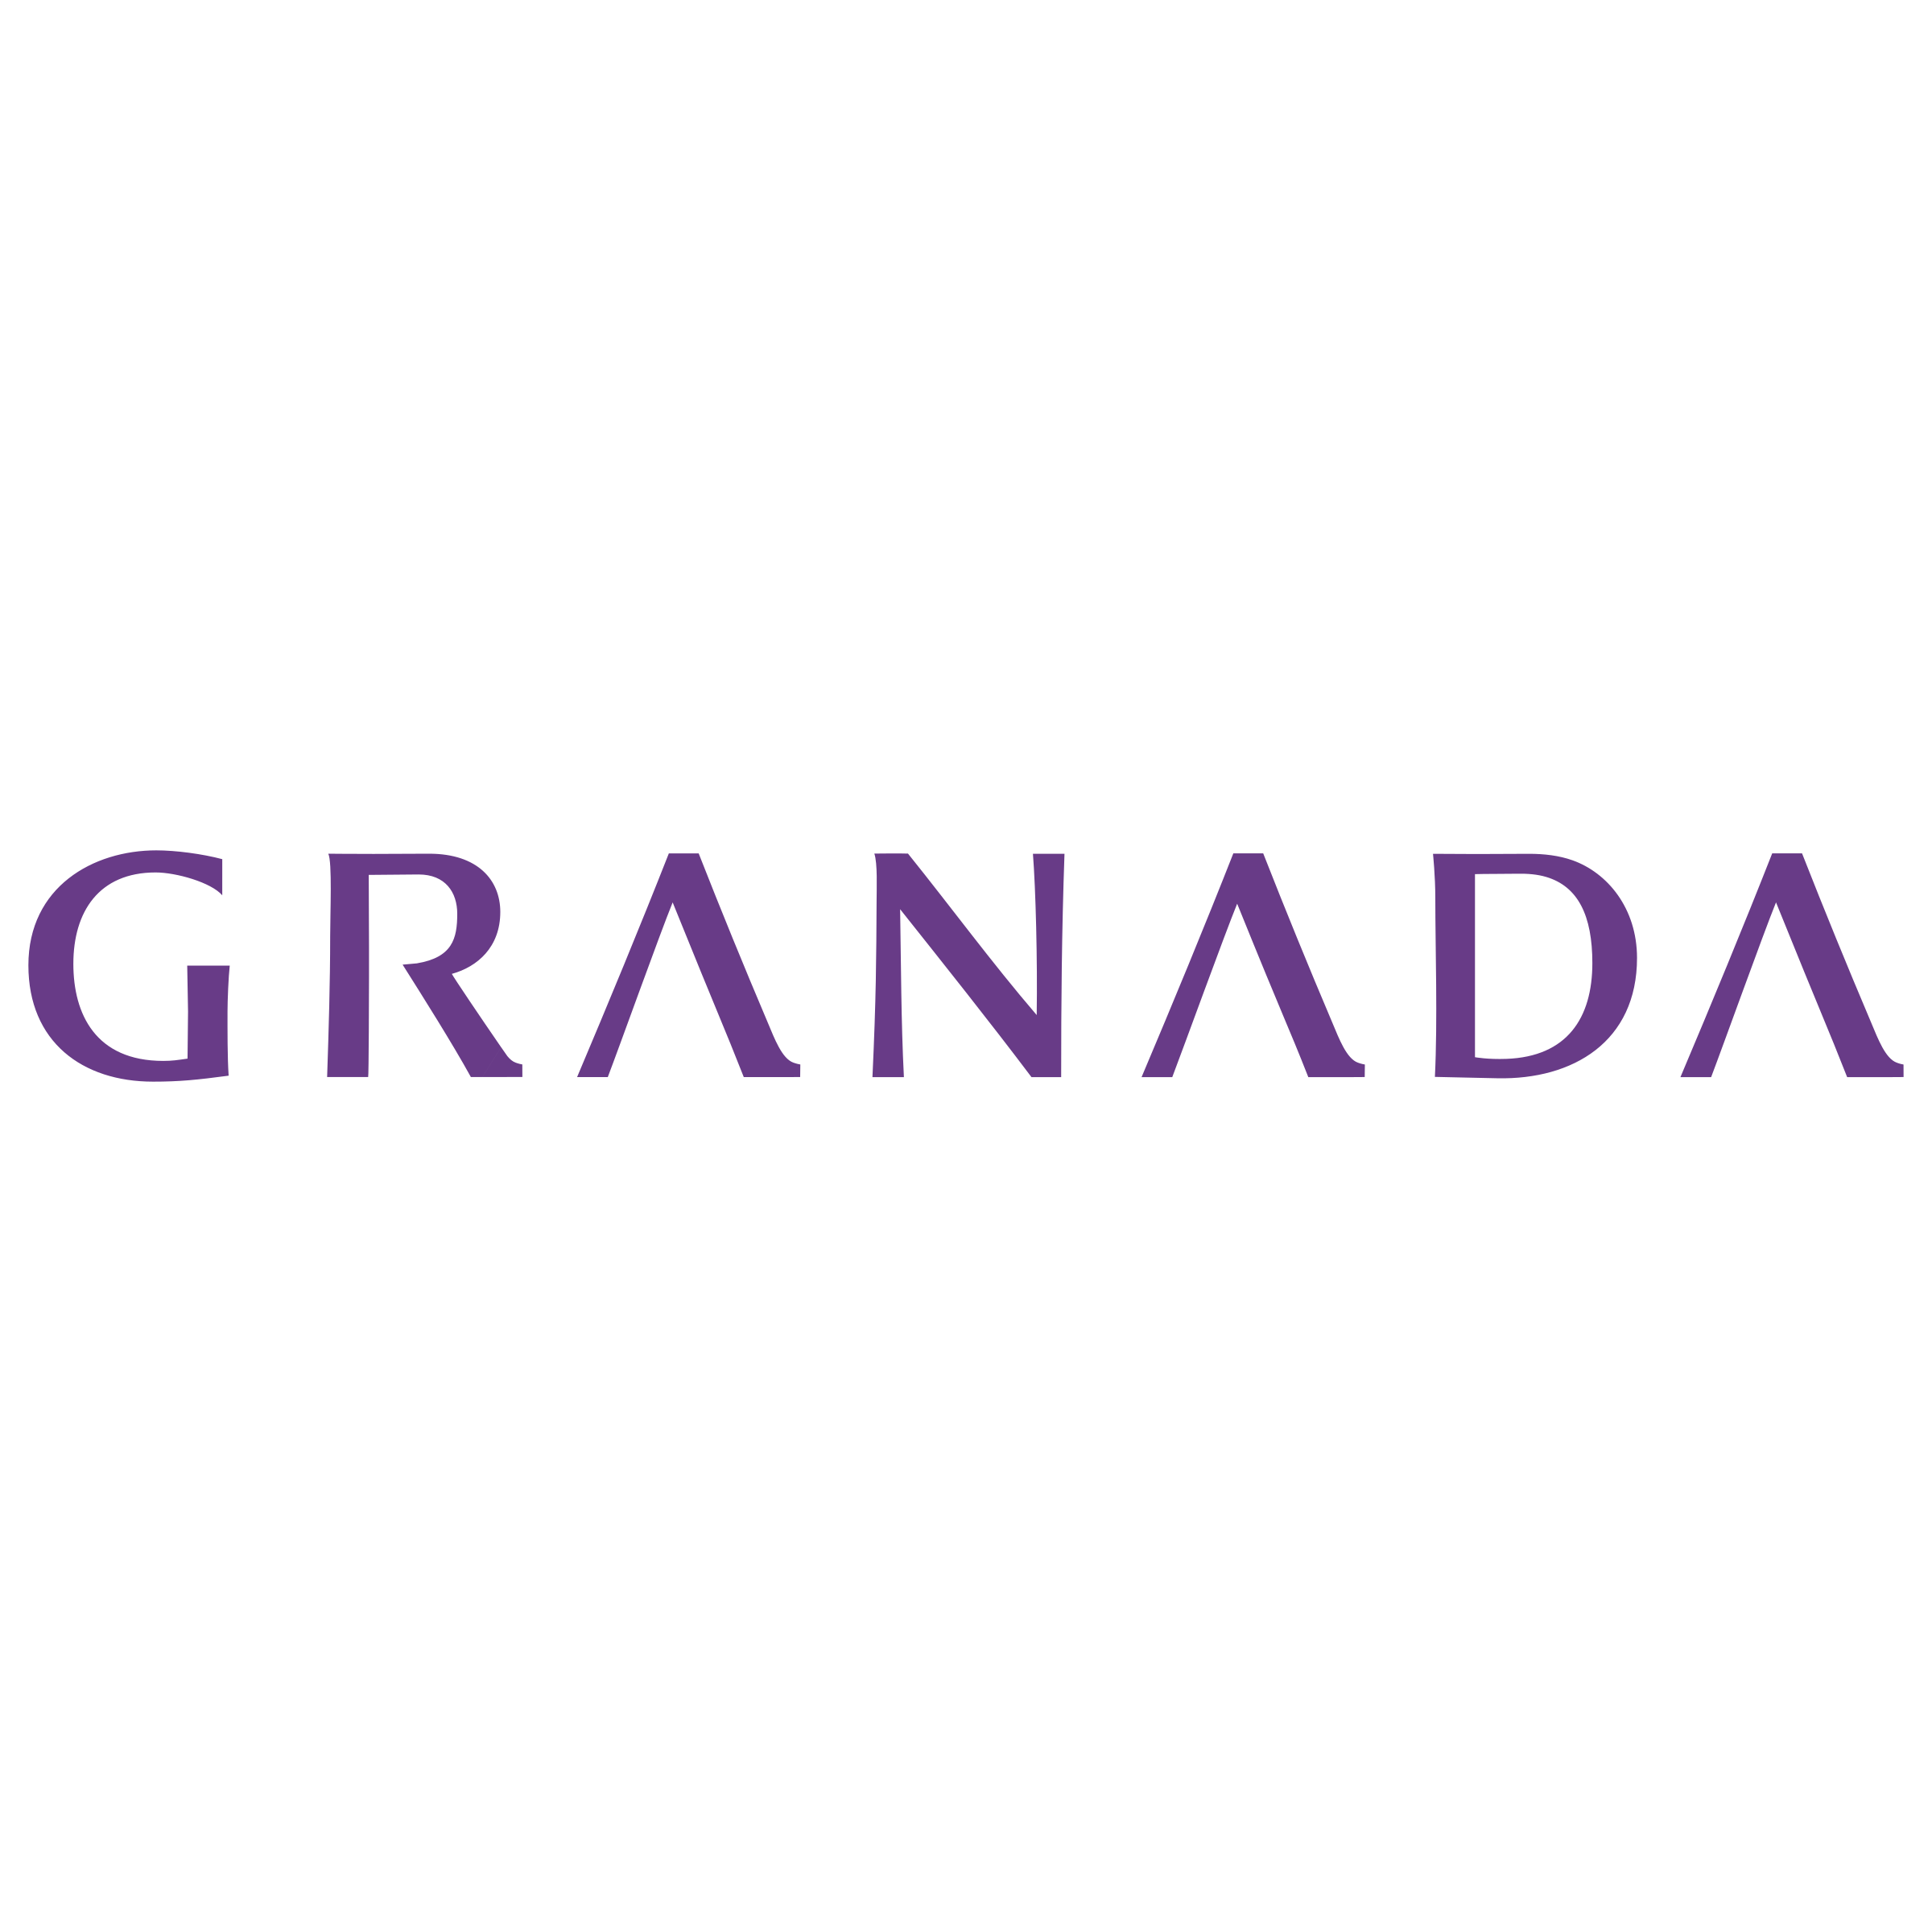 Granada Logo - Granada Logo PNG Transparent & SVG Vector - Freebie Supply